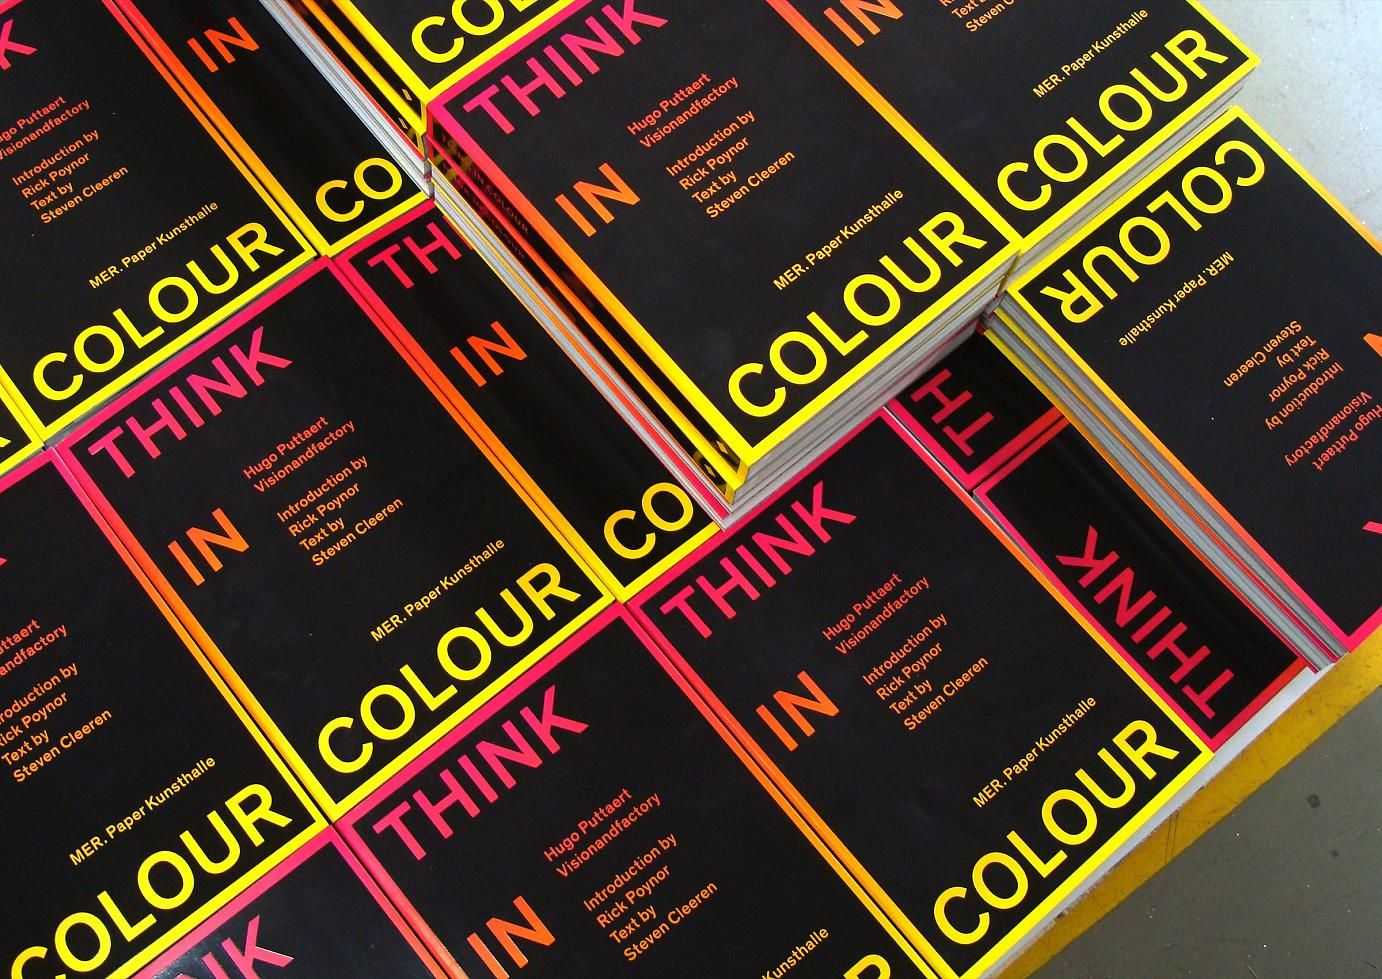 hugo-puttaert-think-in-colour-book-launch